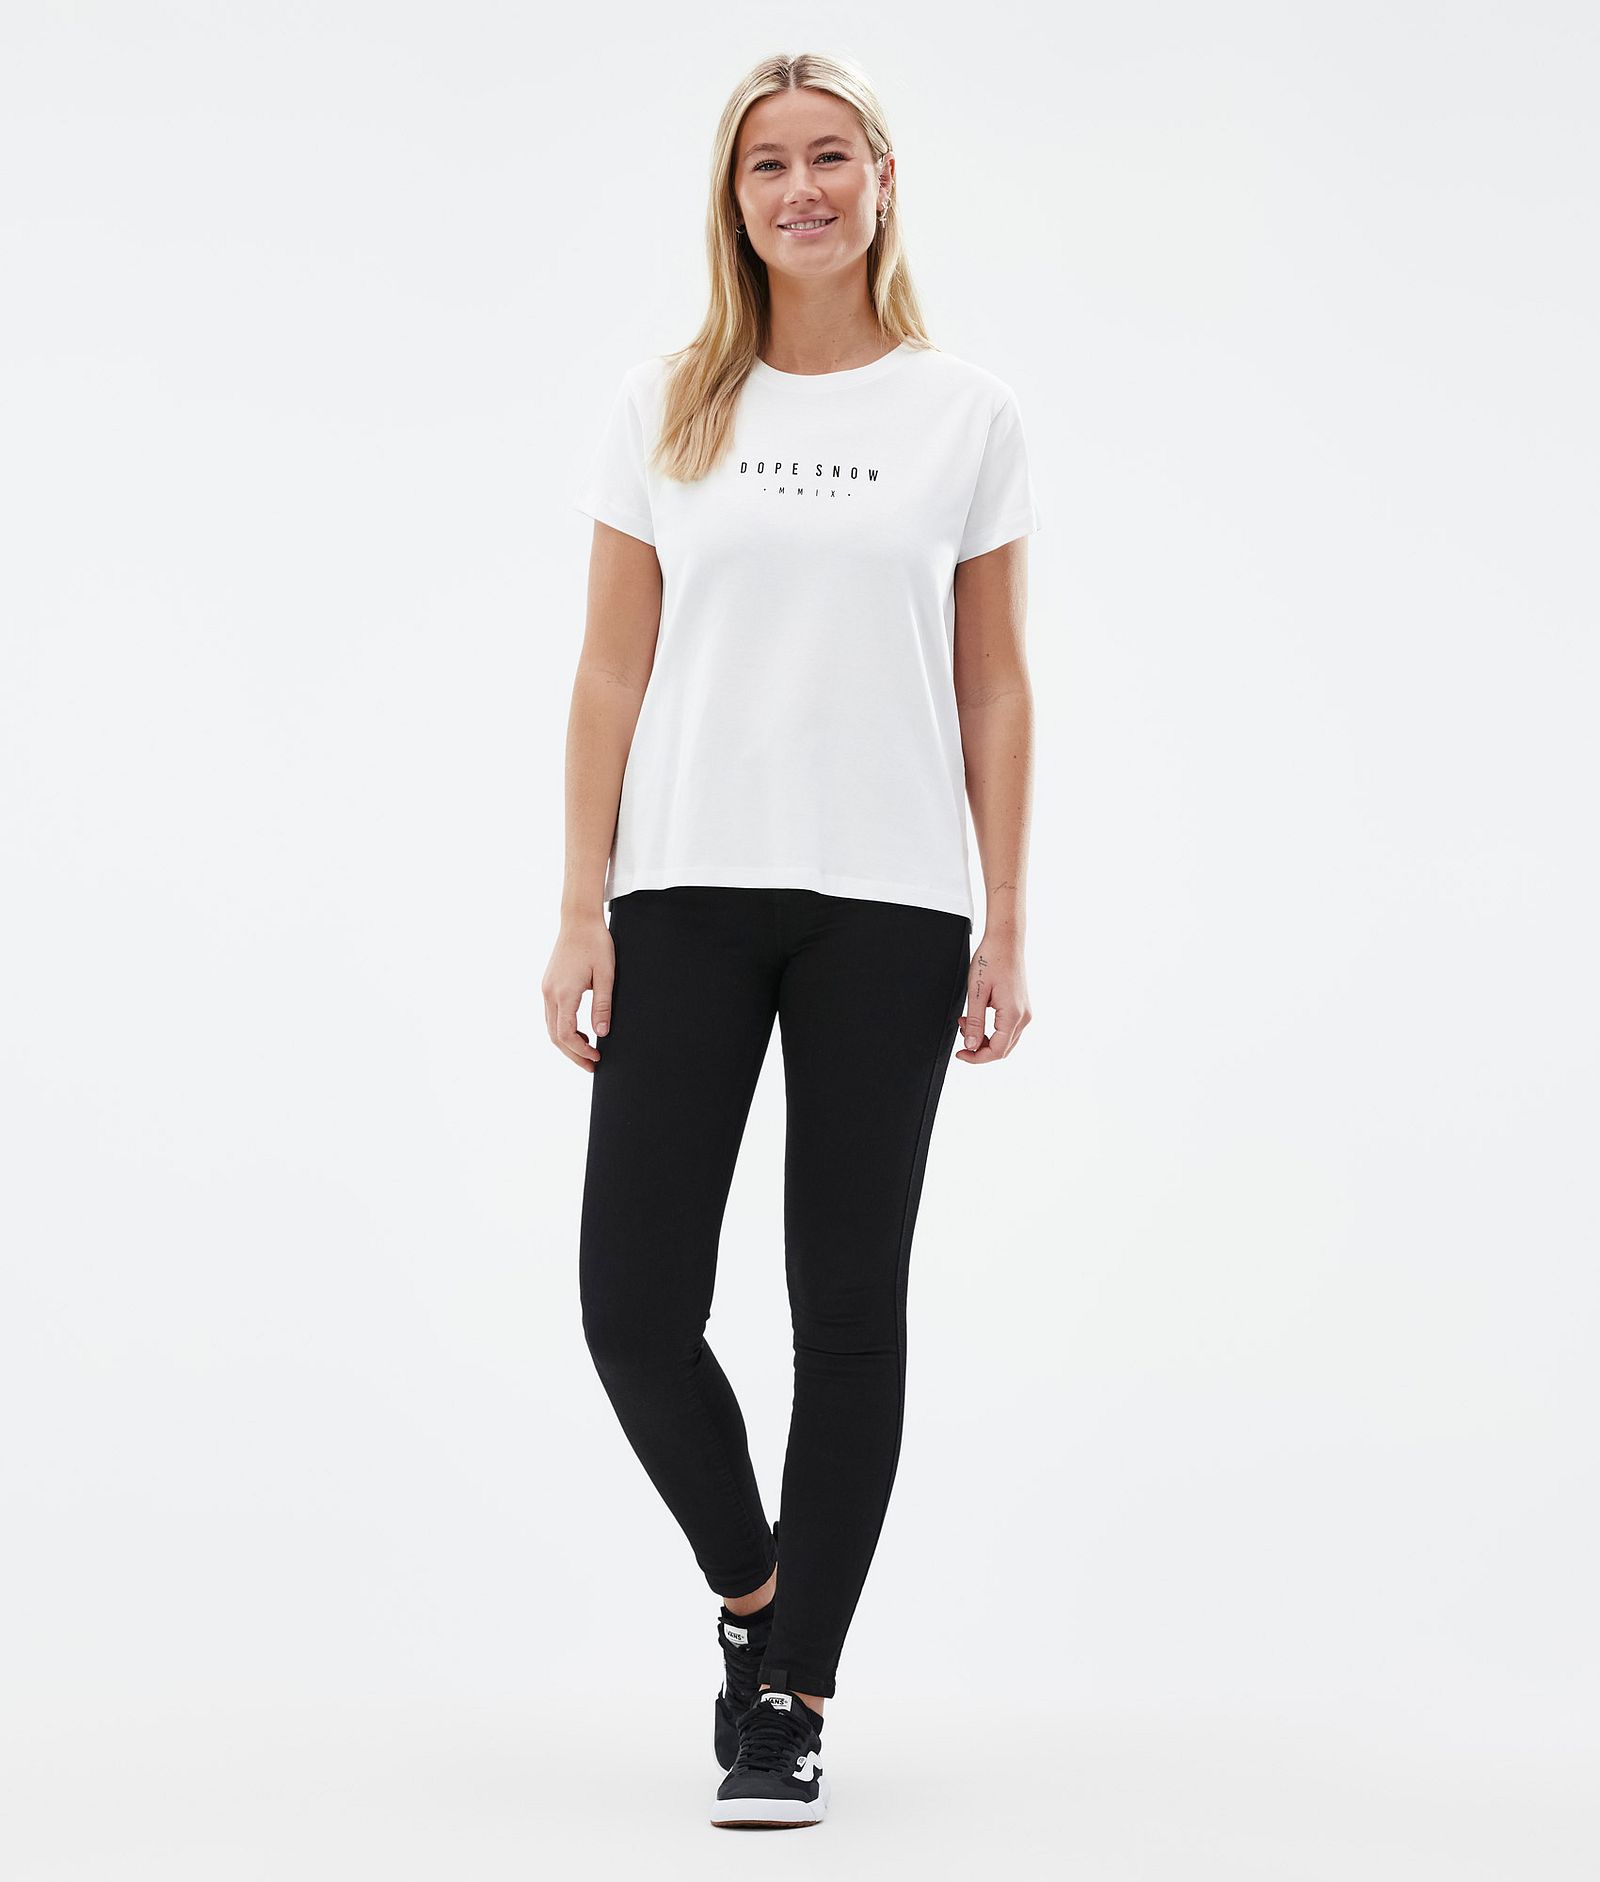 Dope Standard W T-shirt Women Silhouette White